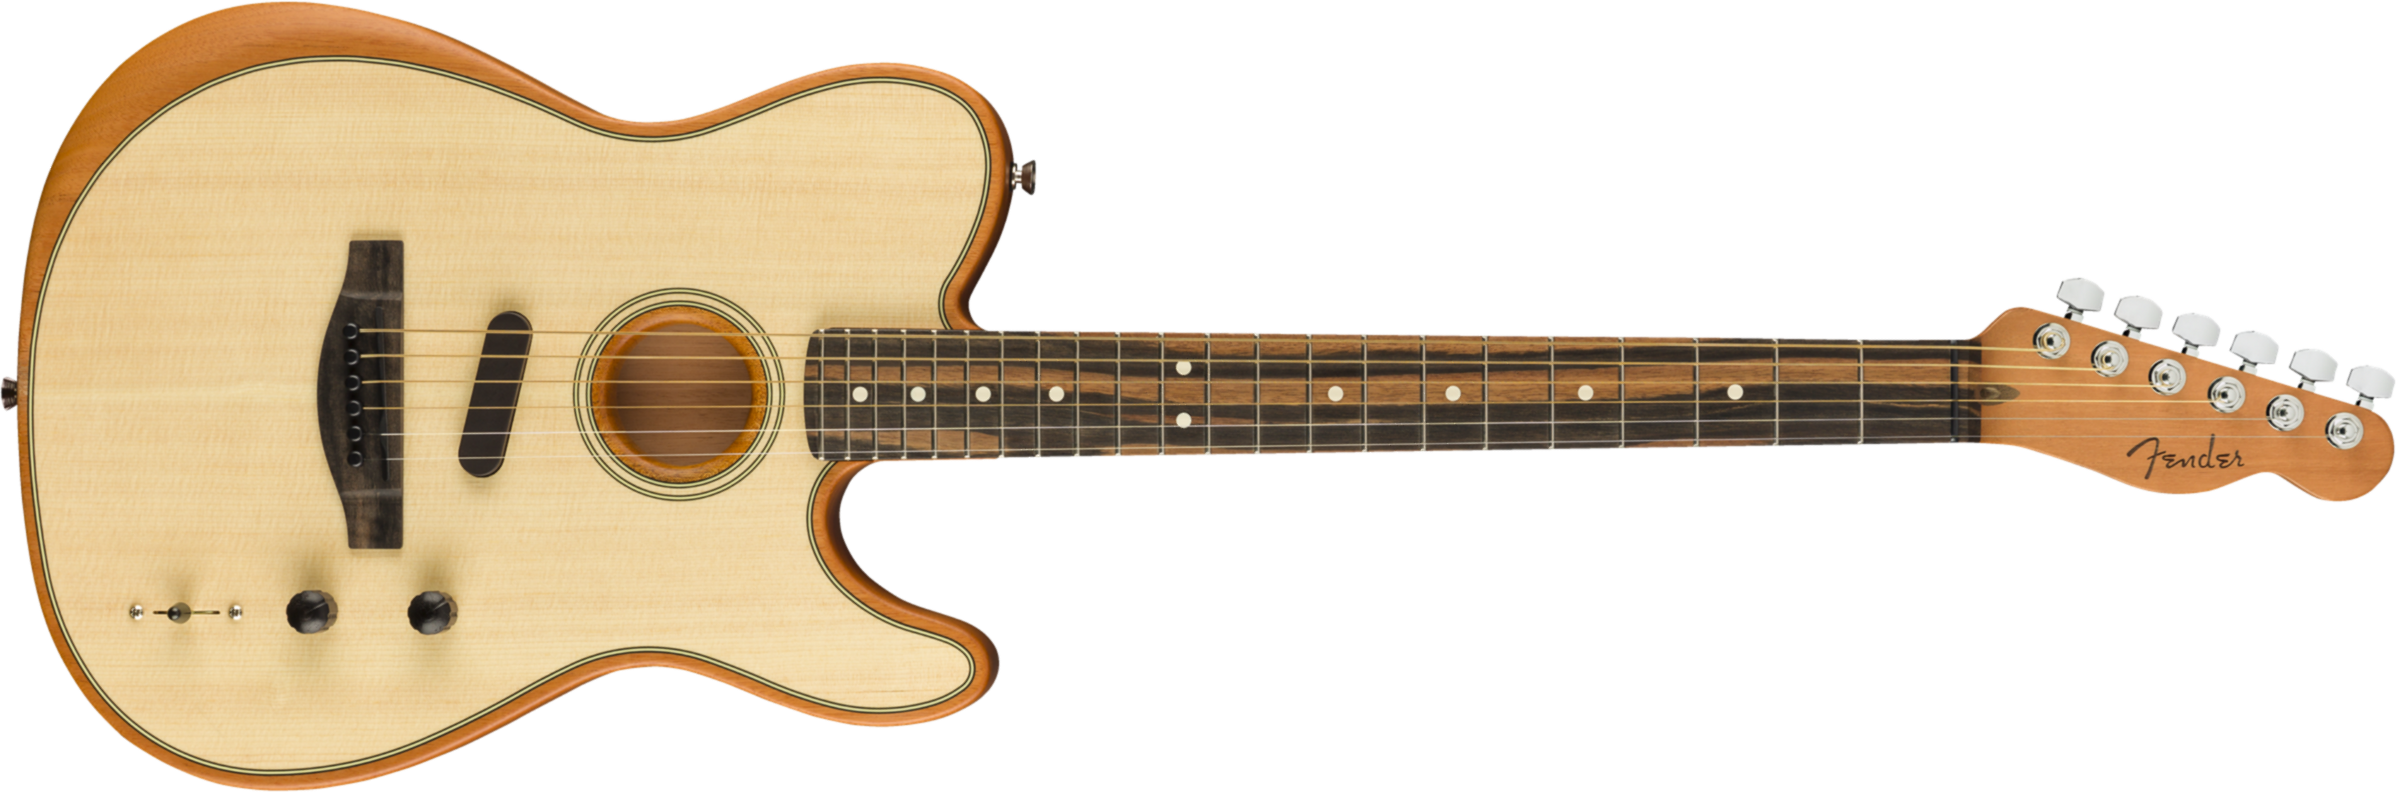 Fender Tele American Acoustasonic Usa Eb - Natural - Acoustic guitar & electro - Main picture